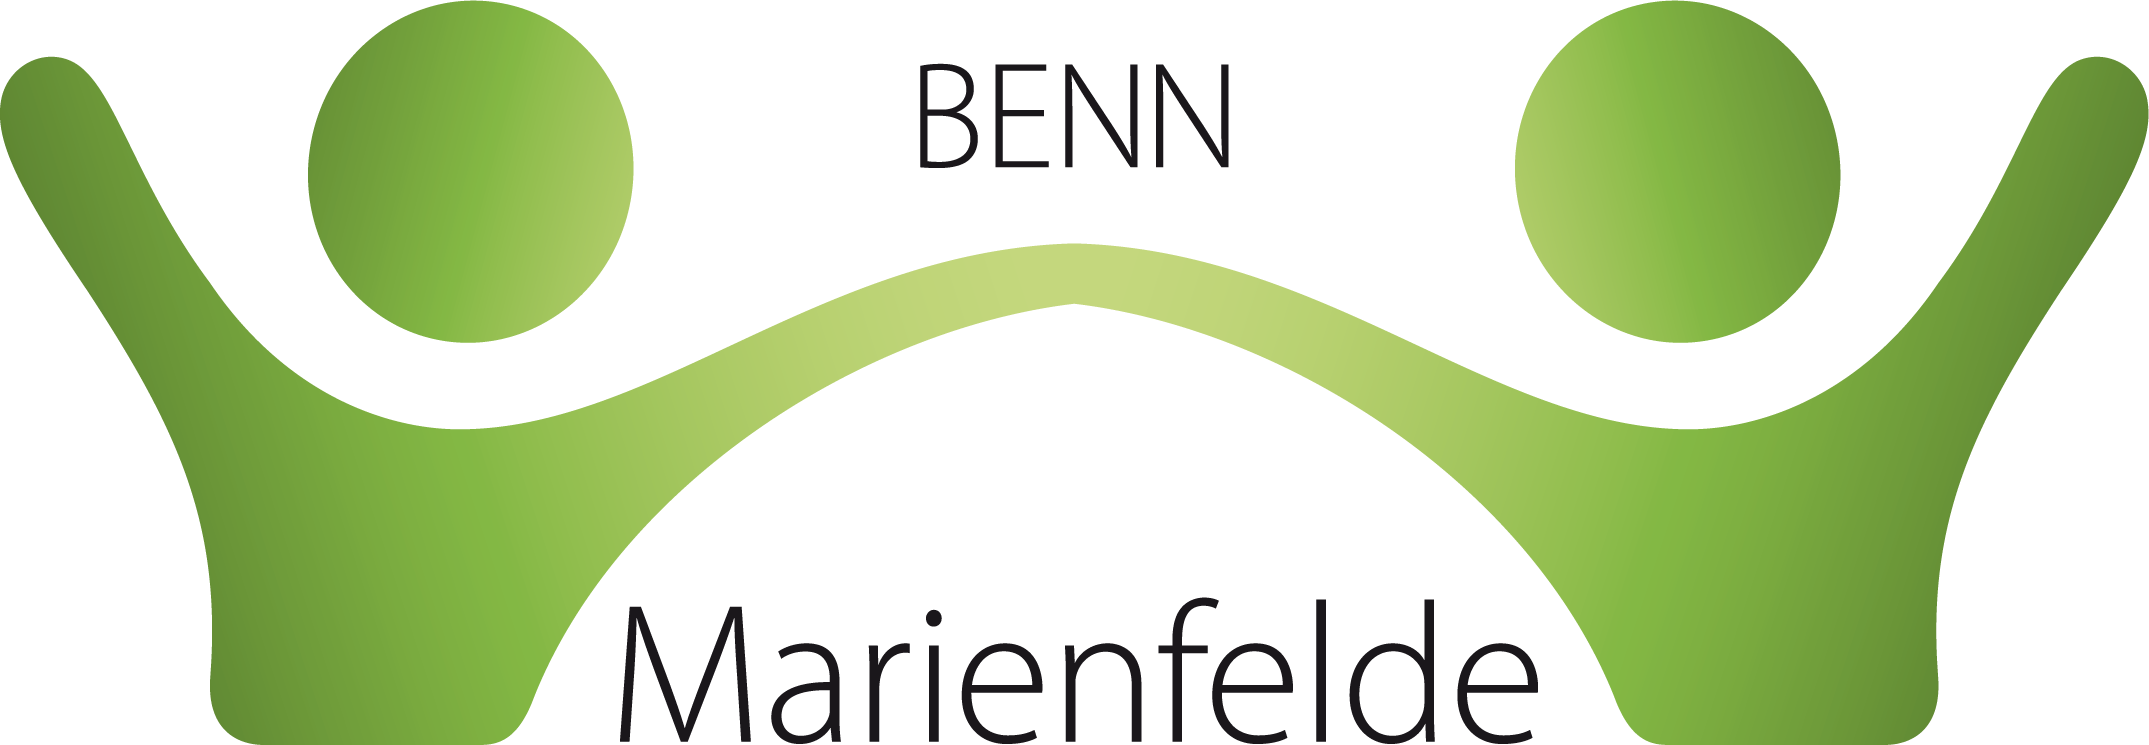 BENN-Marienfelde logo